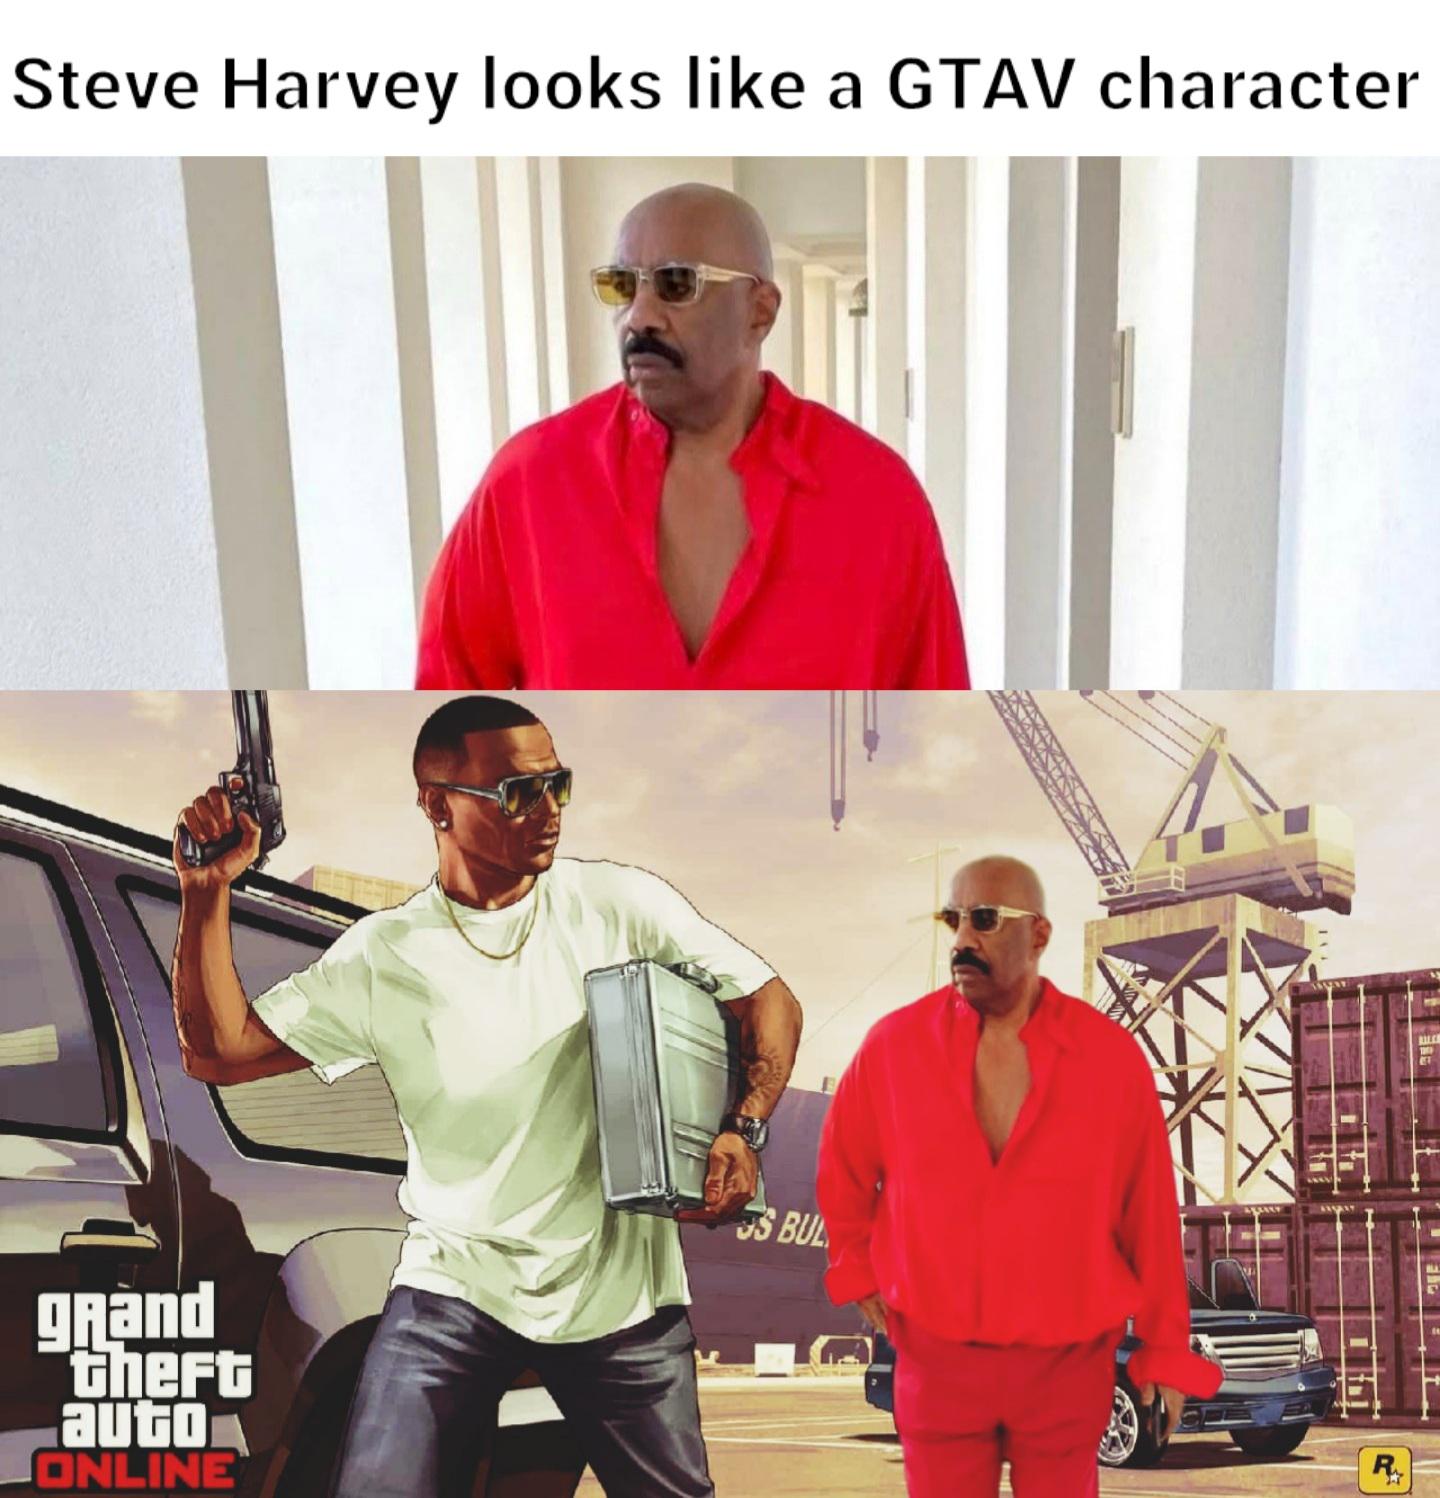 funny gaming memes - gta online heists - Steve Harvey looks a Gtav character Llc Js Bul grand theft auto Online R